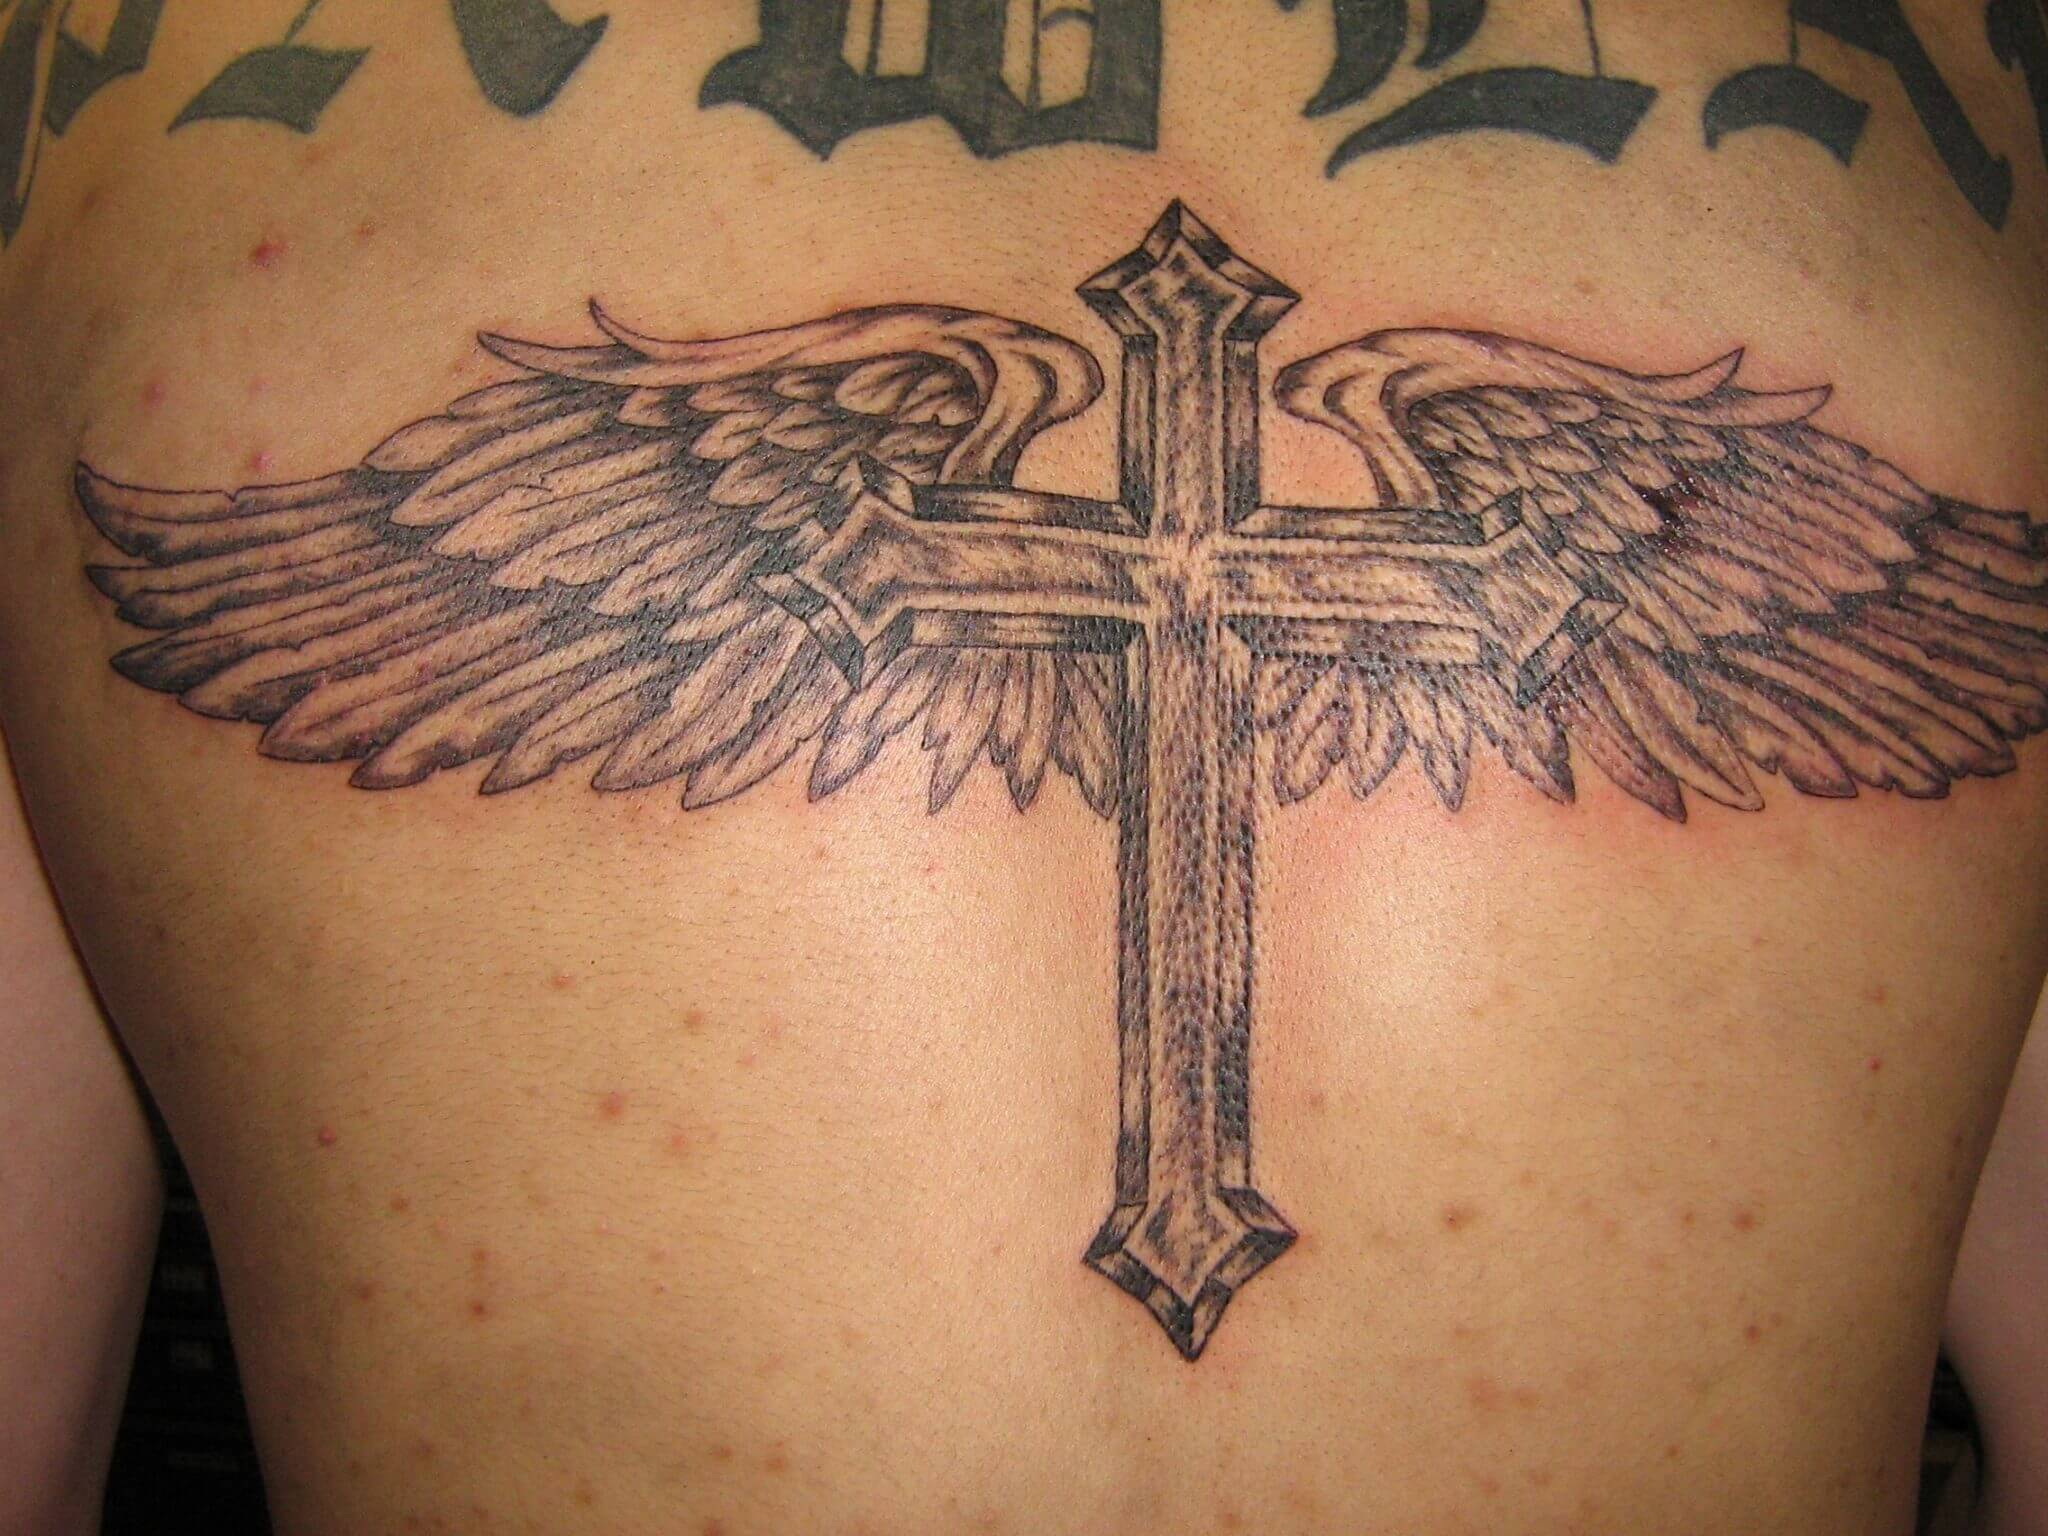 56 Best Cross Tattoos For Men Improb in dimensions 2048 X 1536